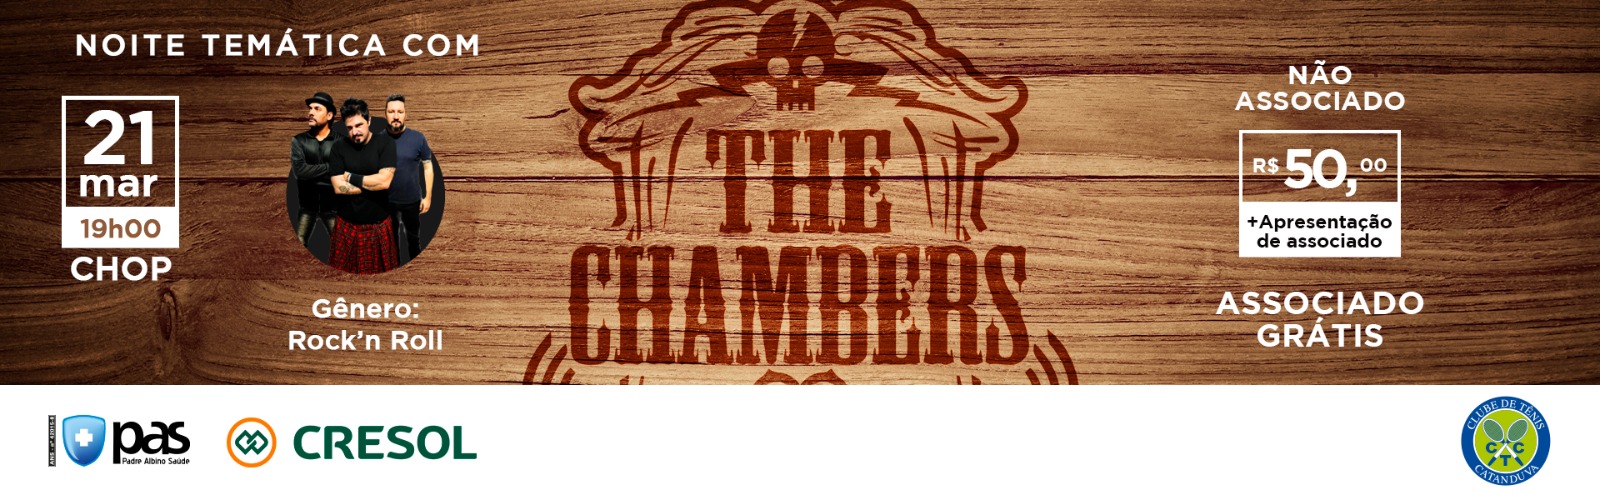 Noite Temática – The Chambers